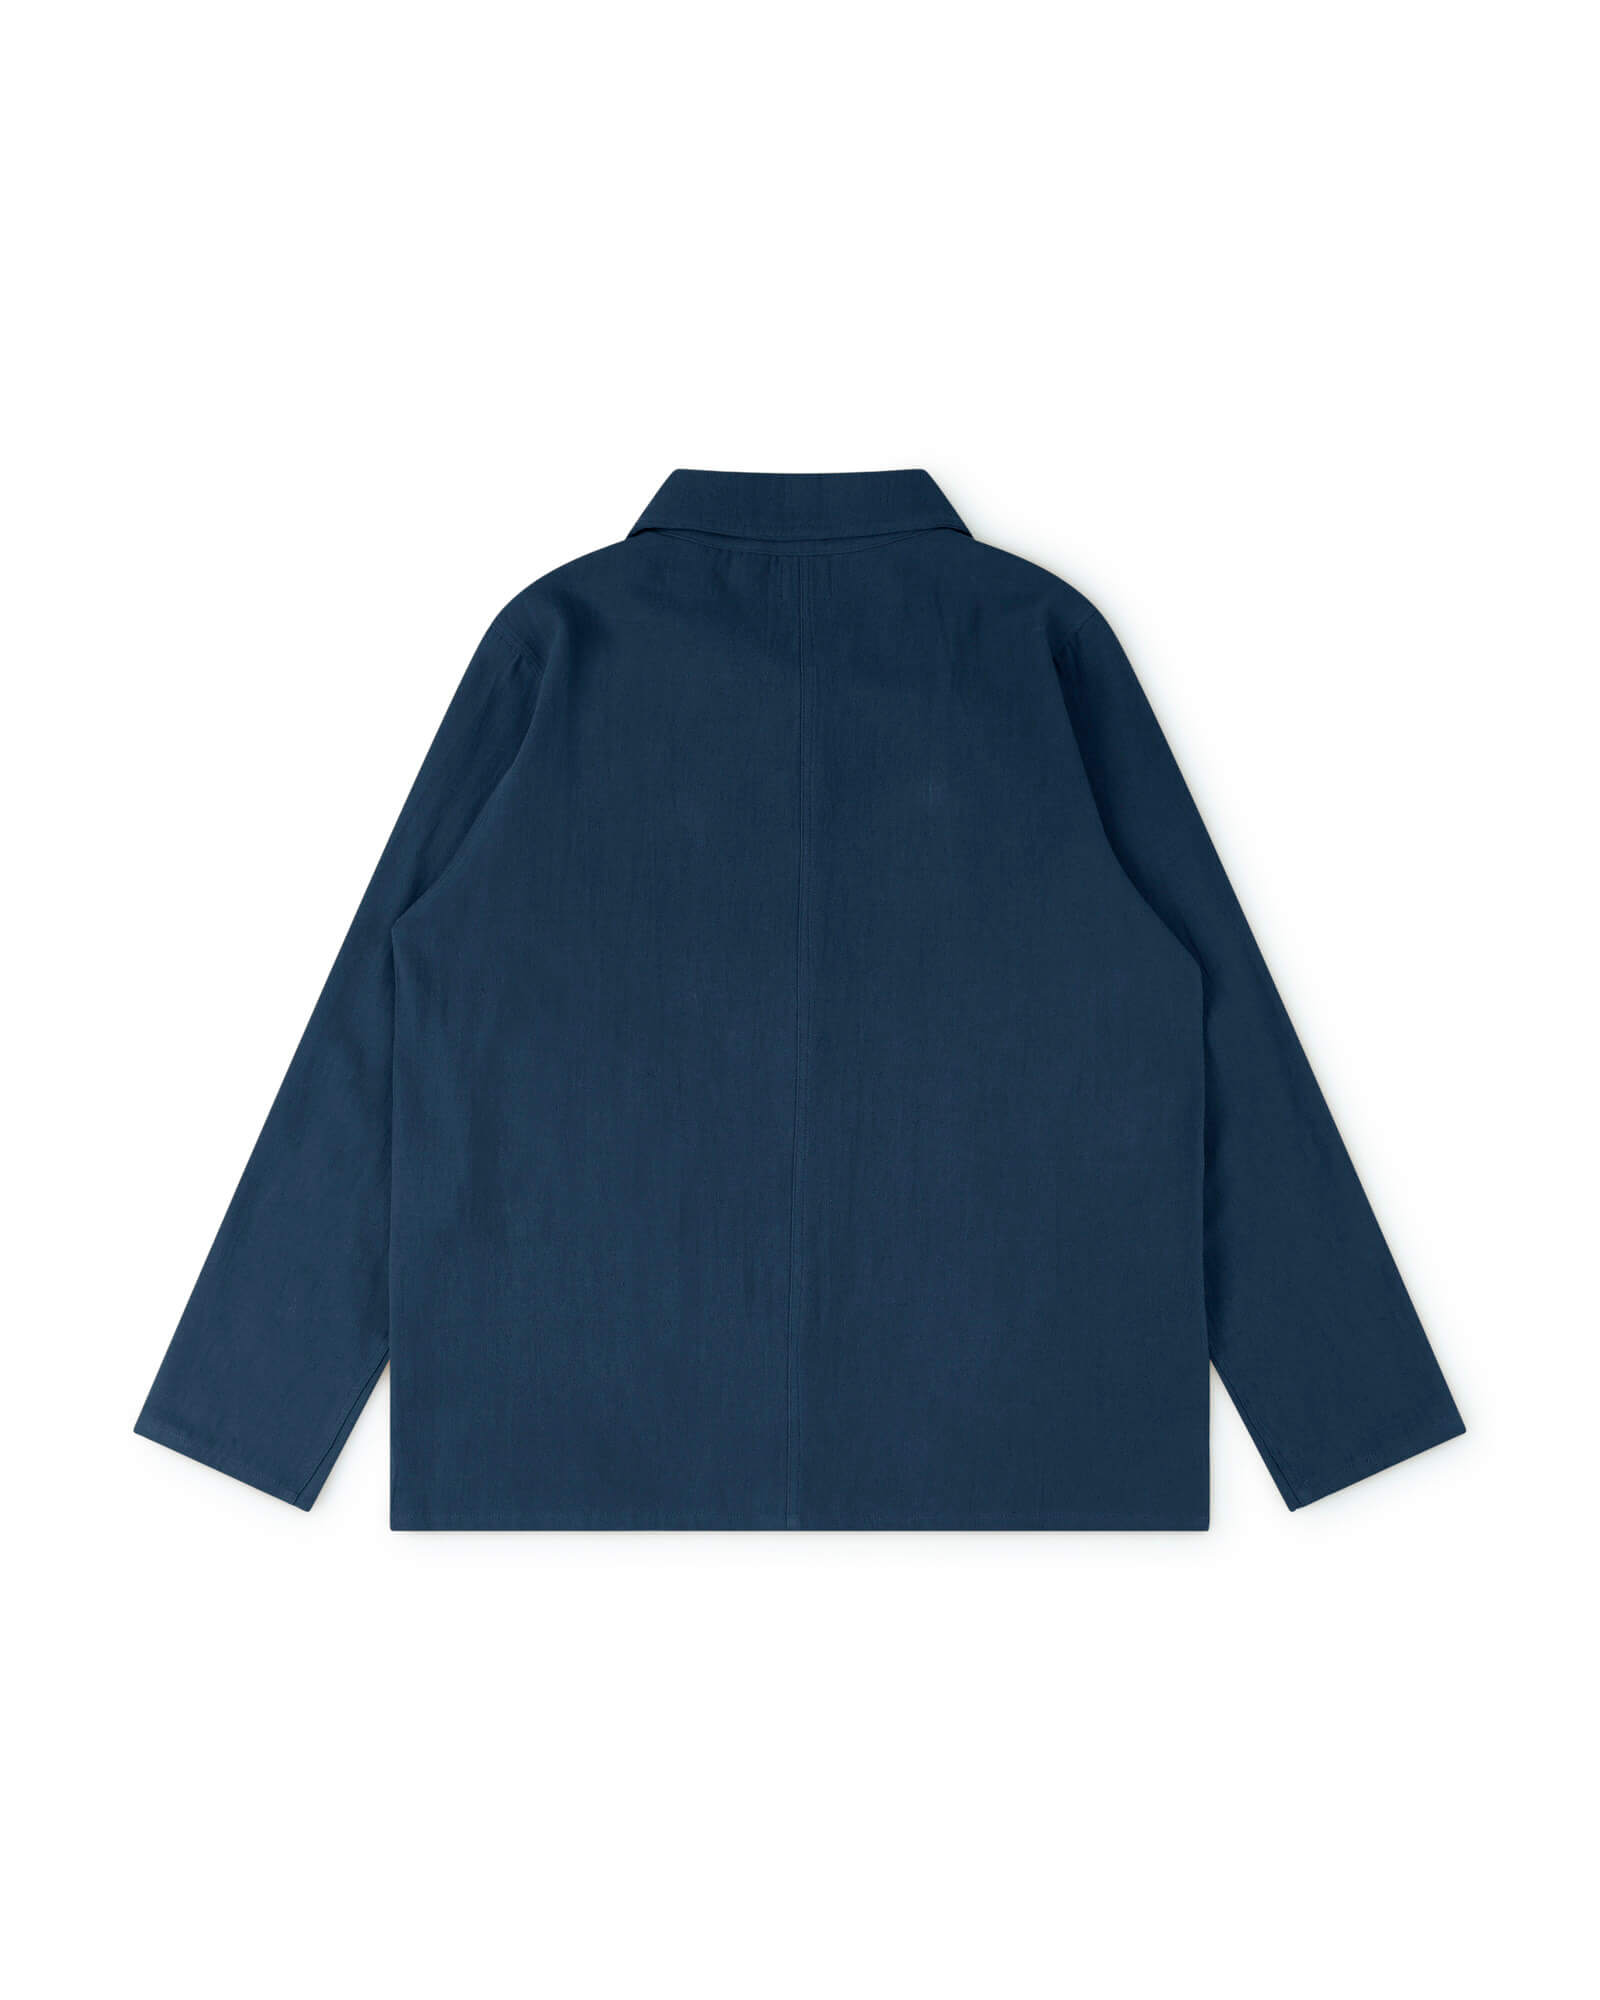 Dark blue nightfall jacket made from 100% organic cotton from Matona